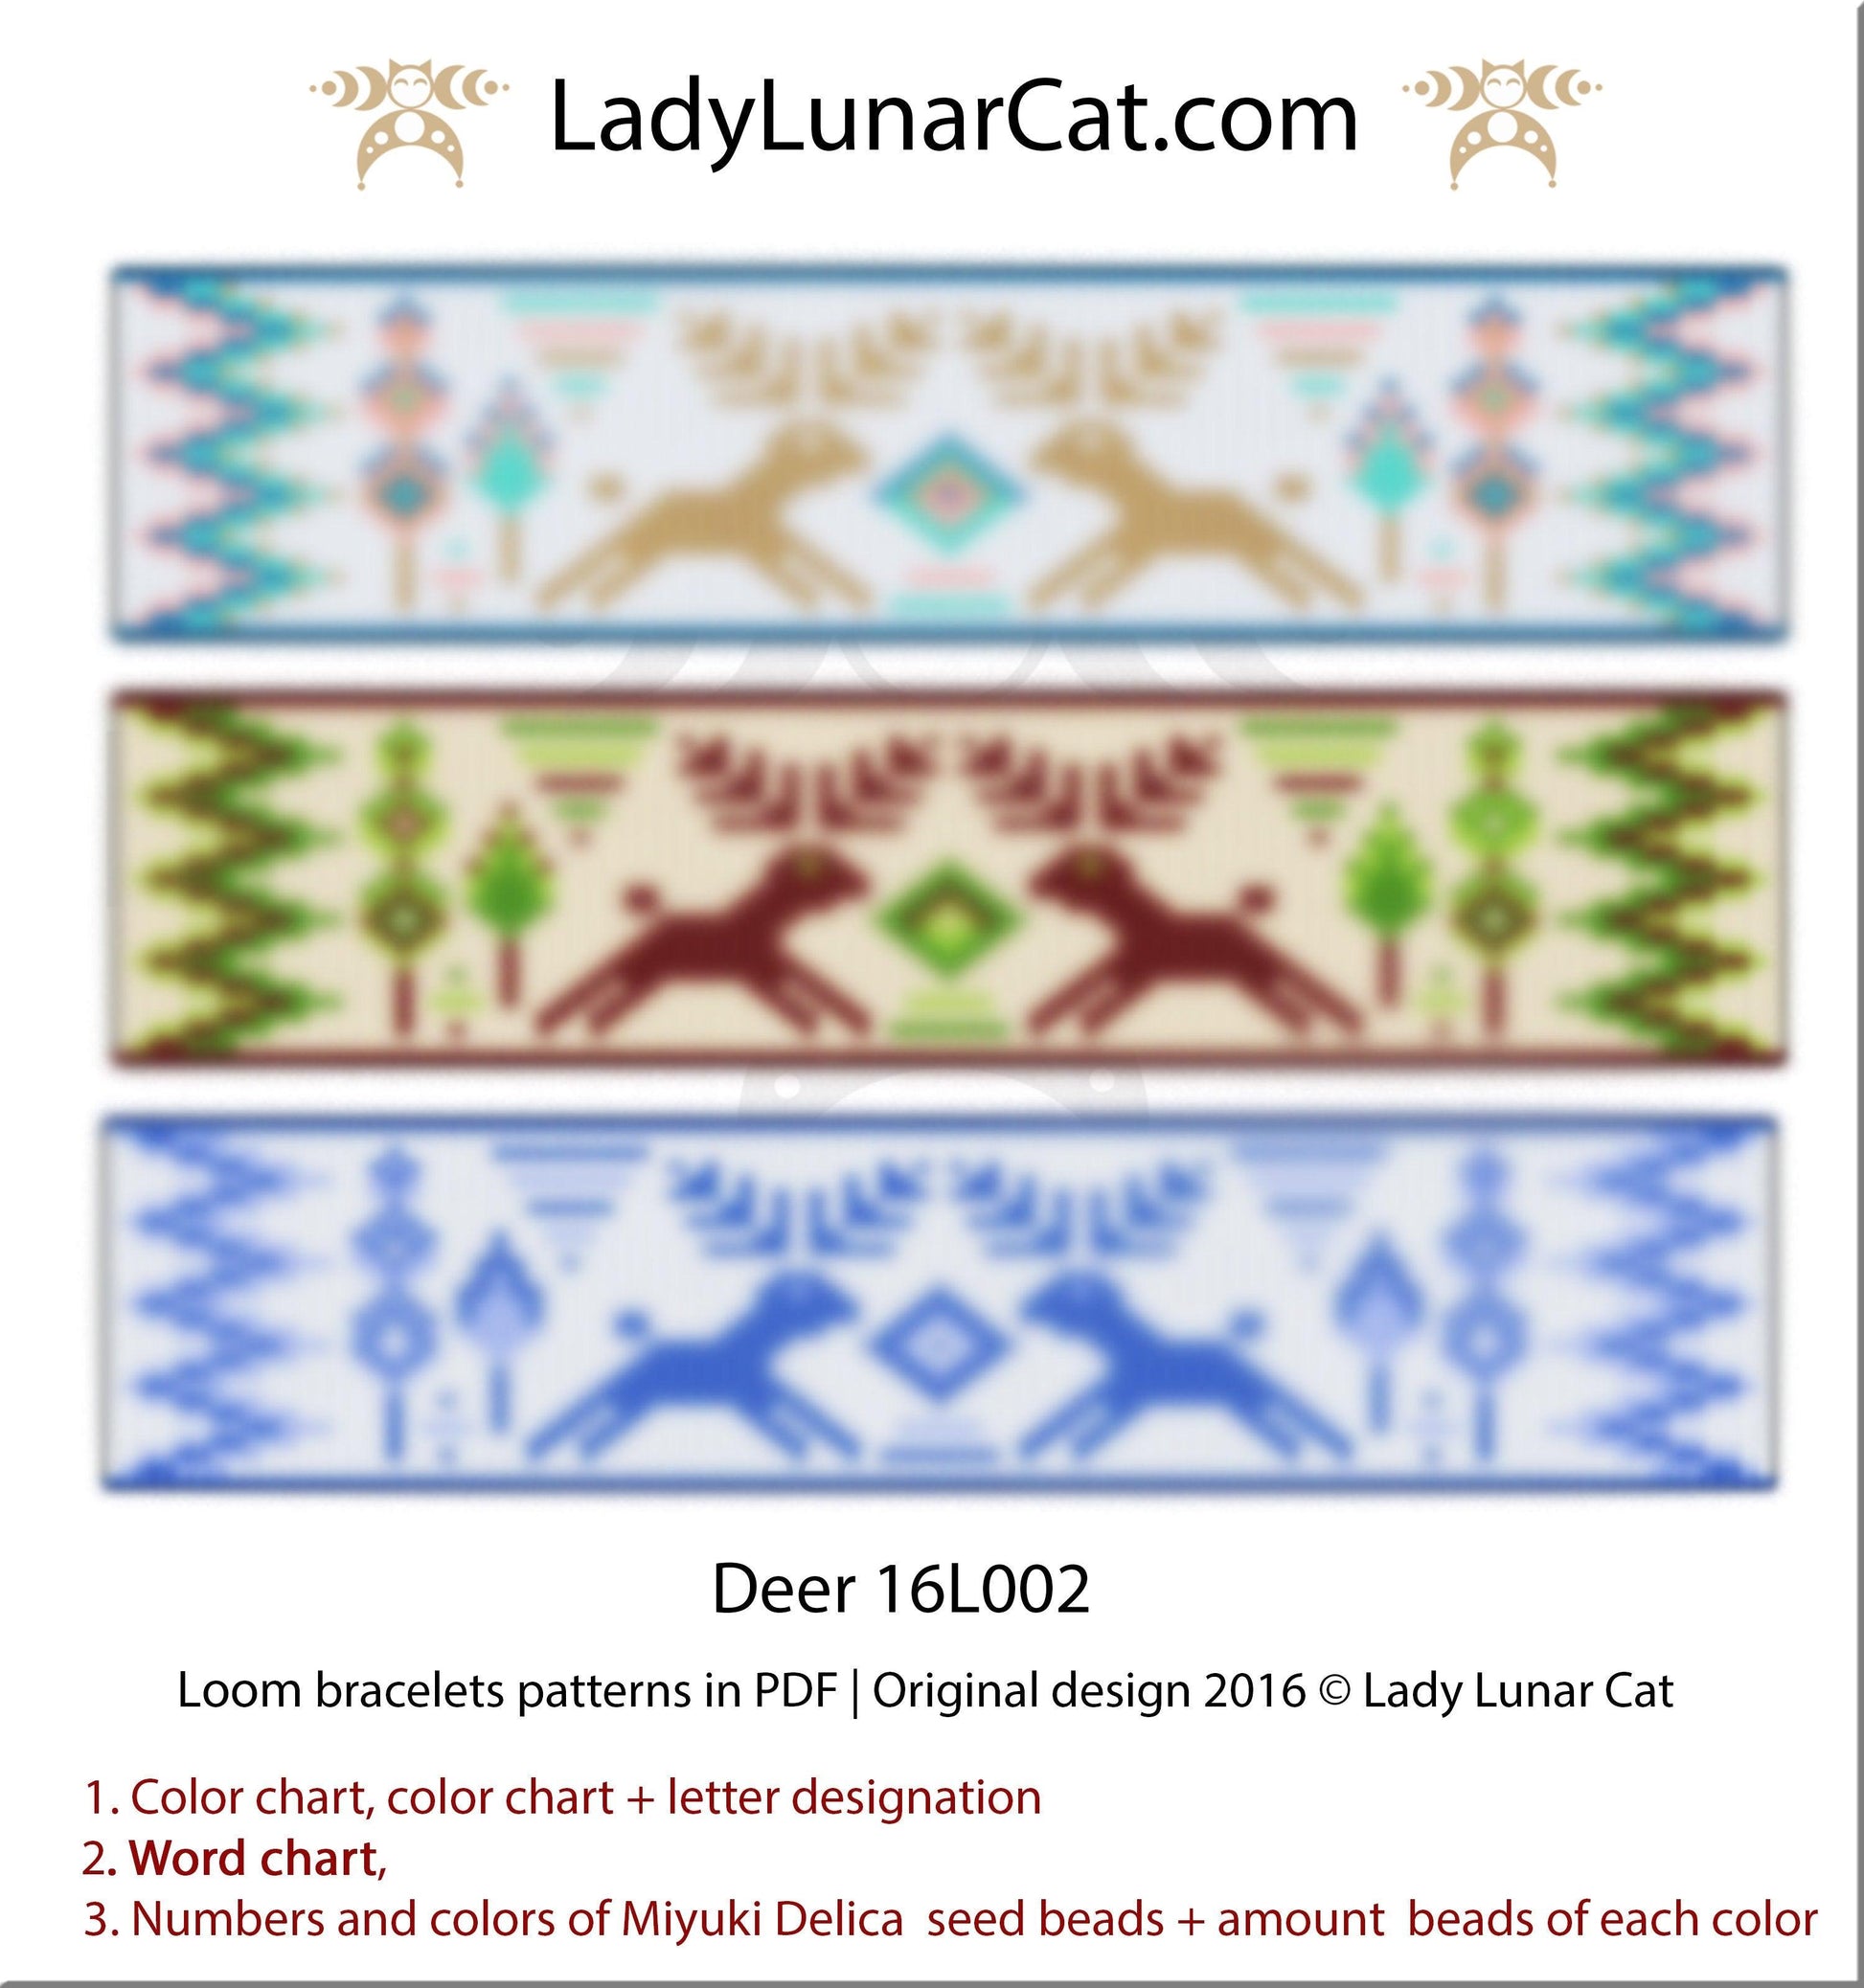 Bead loom pattern for bracelets - Christmas Deer 16L002 LadyLunarCat